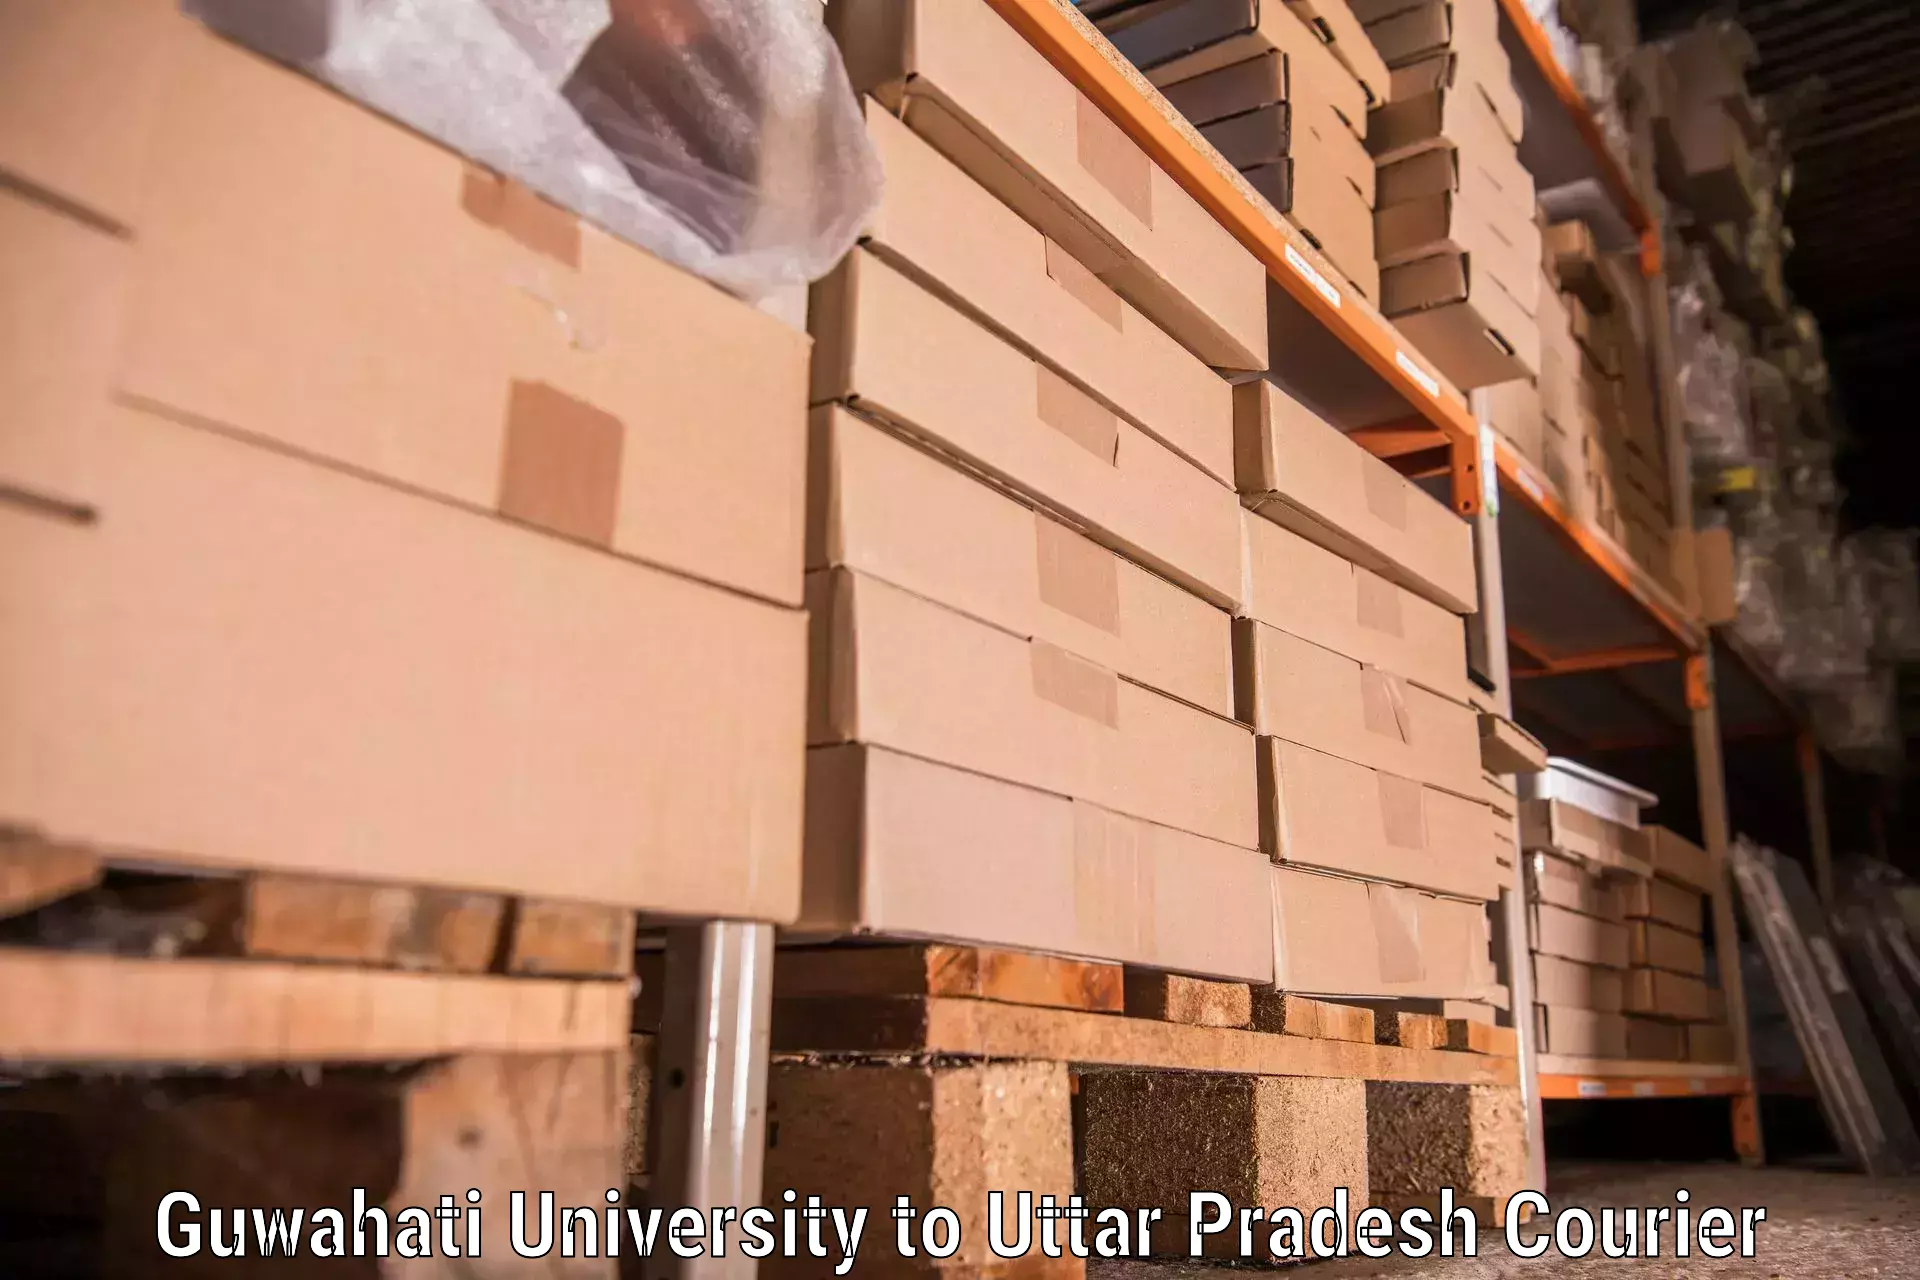 Professional packing services Guwahati University to Chandpur